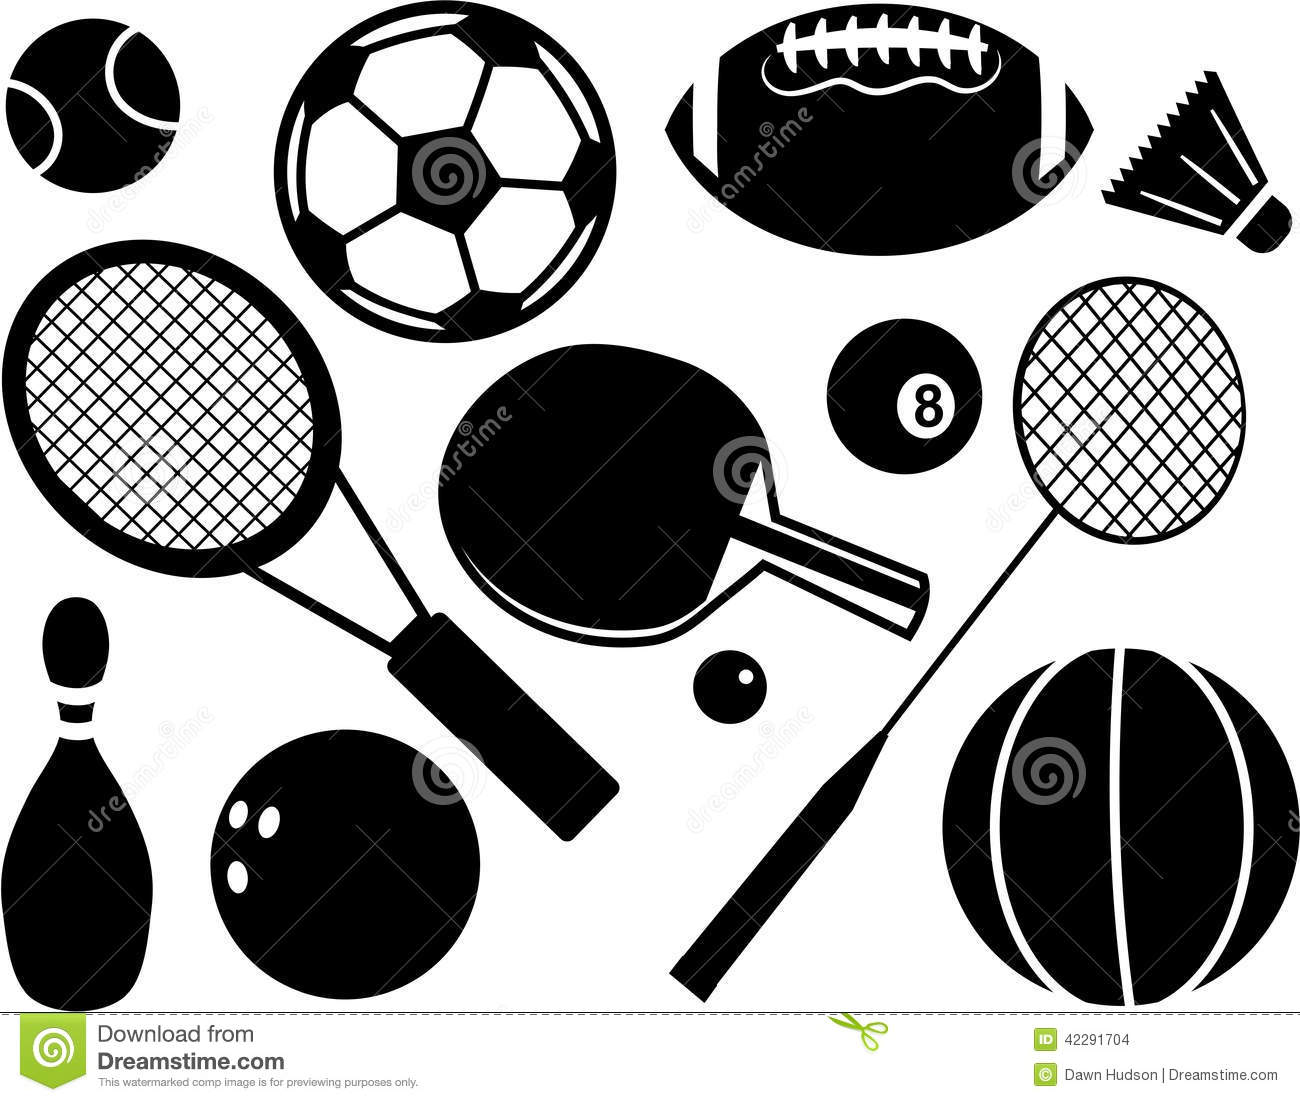     Football Basketball Table Tennis Bat Ten Pin Bowling And Badminton